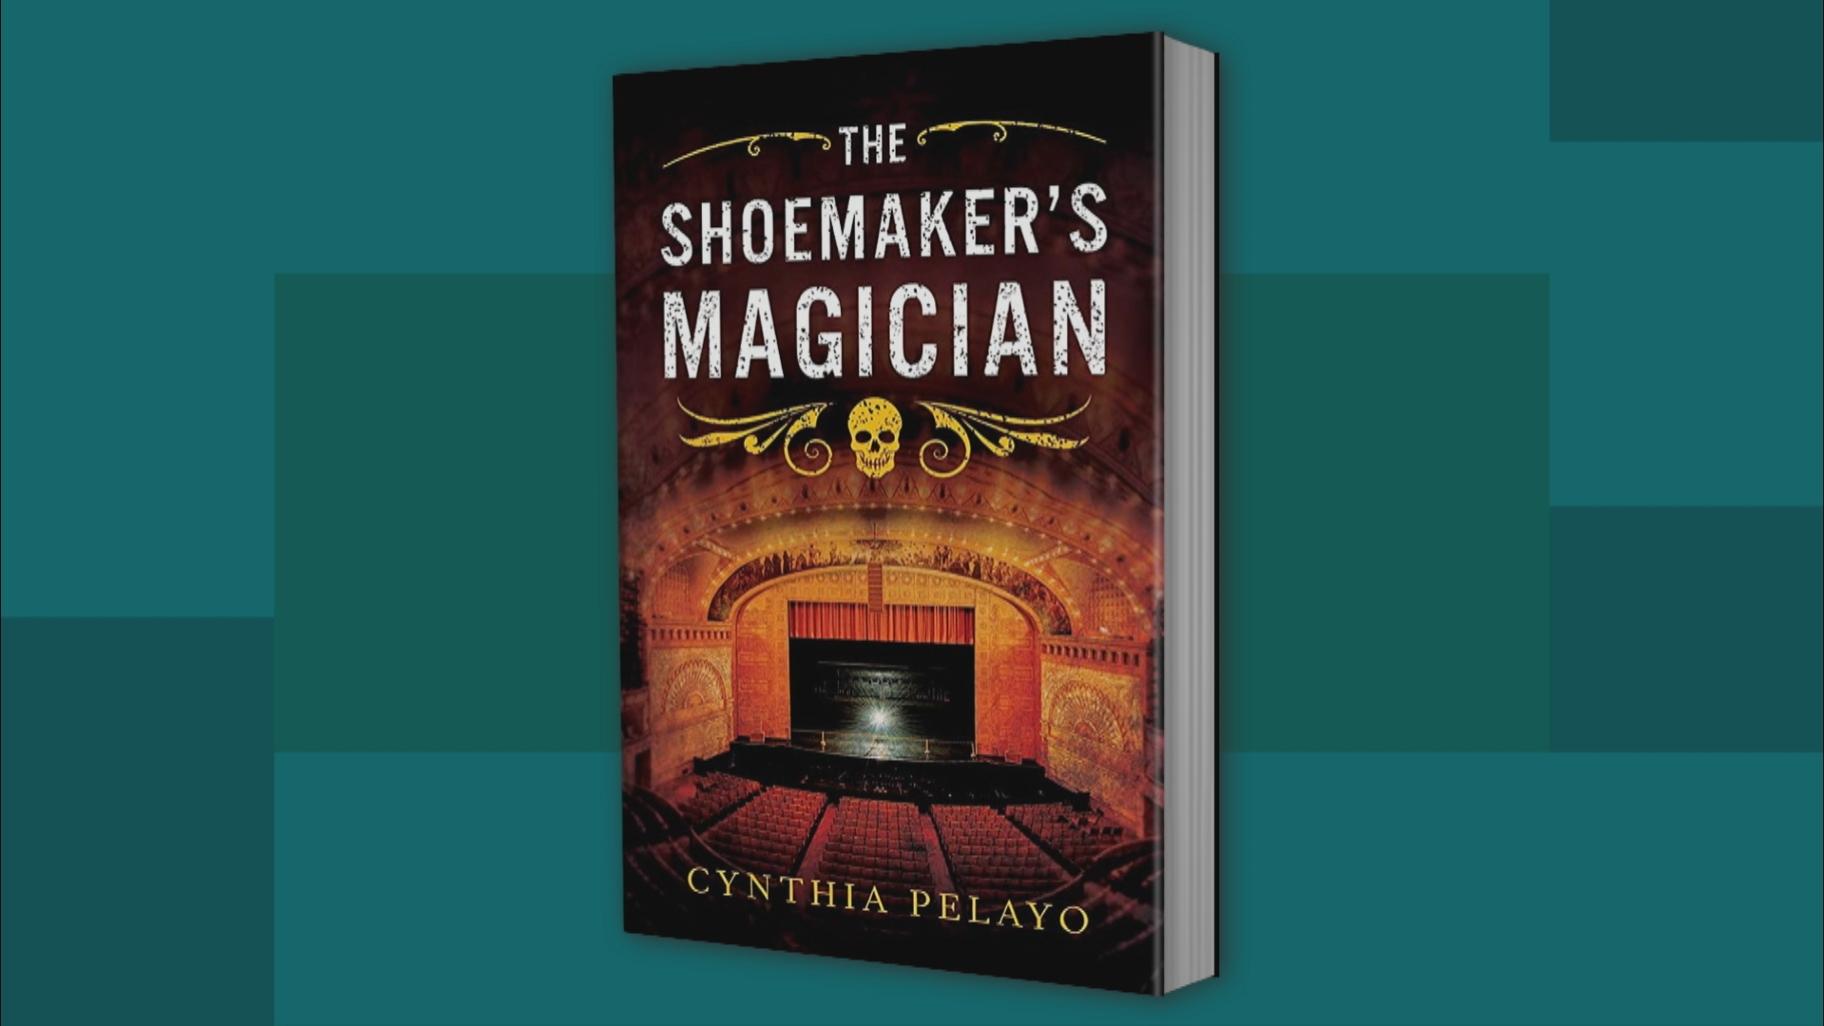 “The Shoemaker’s Magician” by Cynthia Pelayo.